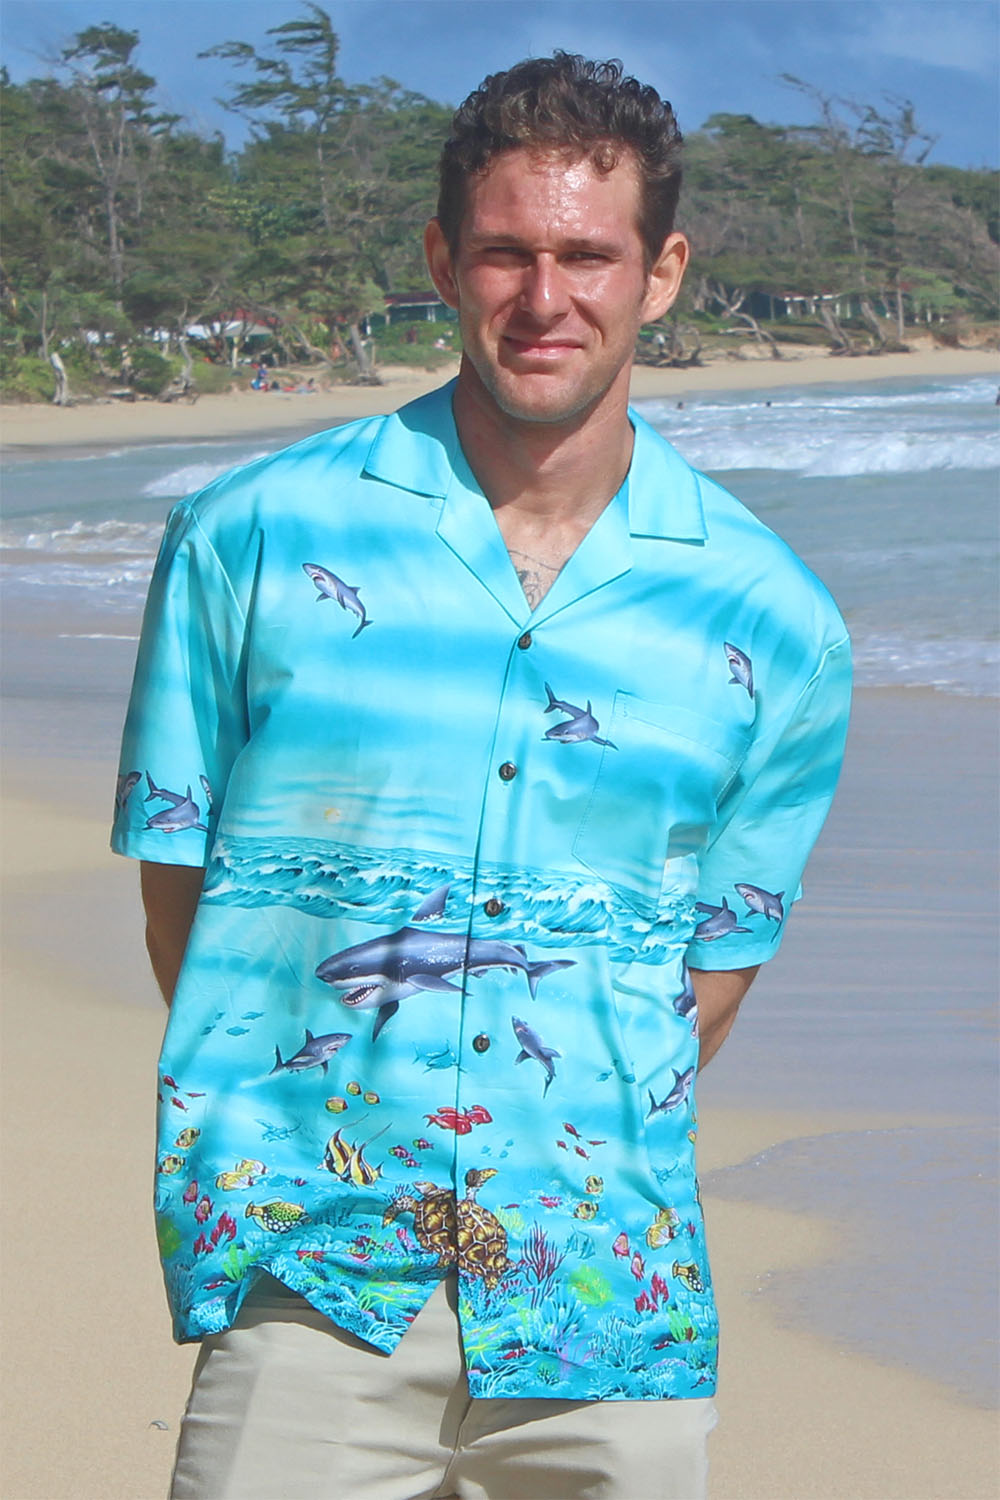 Yves Shark Storm border print Hawaiian shirt made of 100% cotton